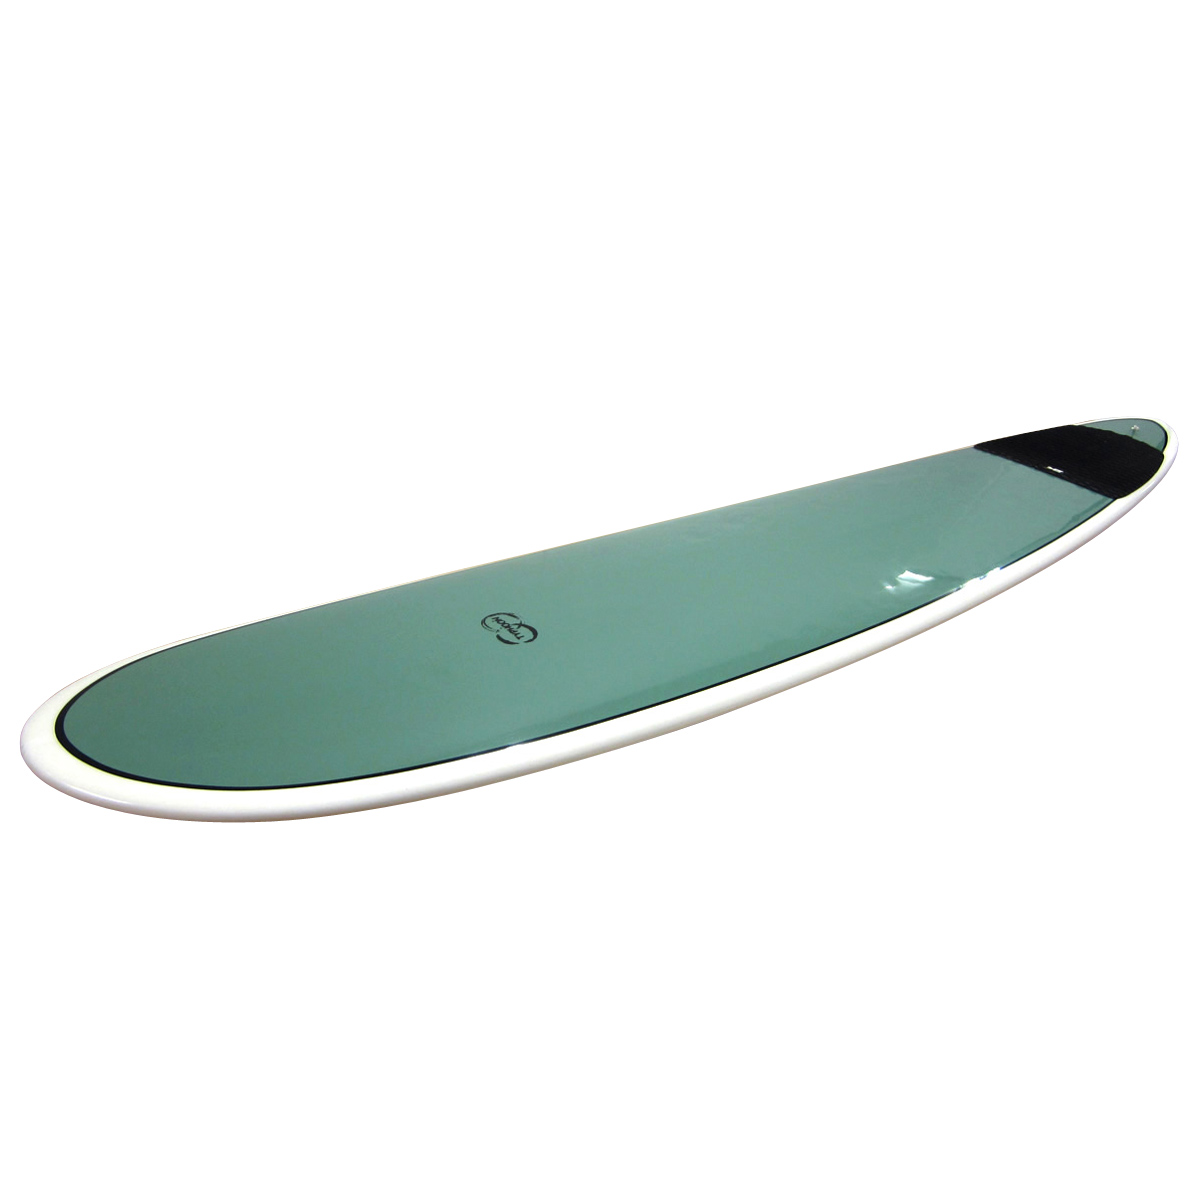 Typhoon Surfboards / 9`1 Custom Shaped By Kyle Bernhardt